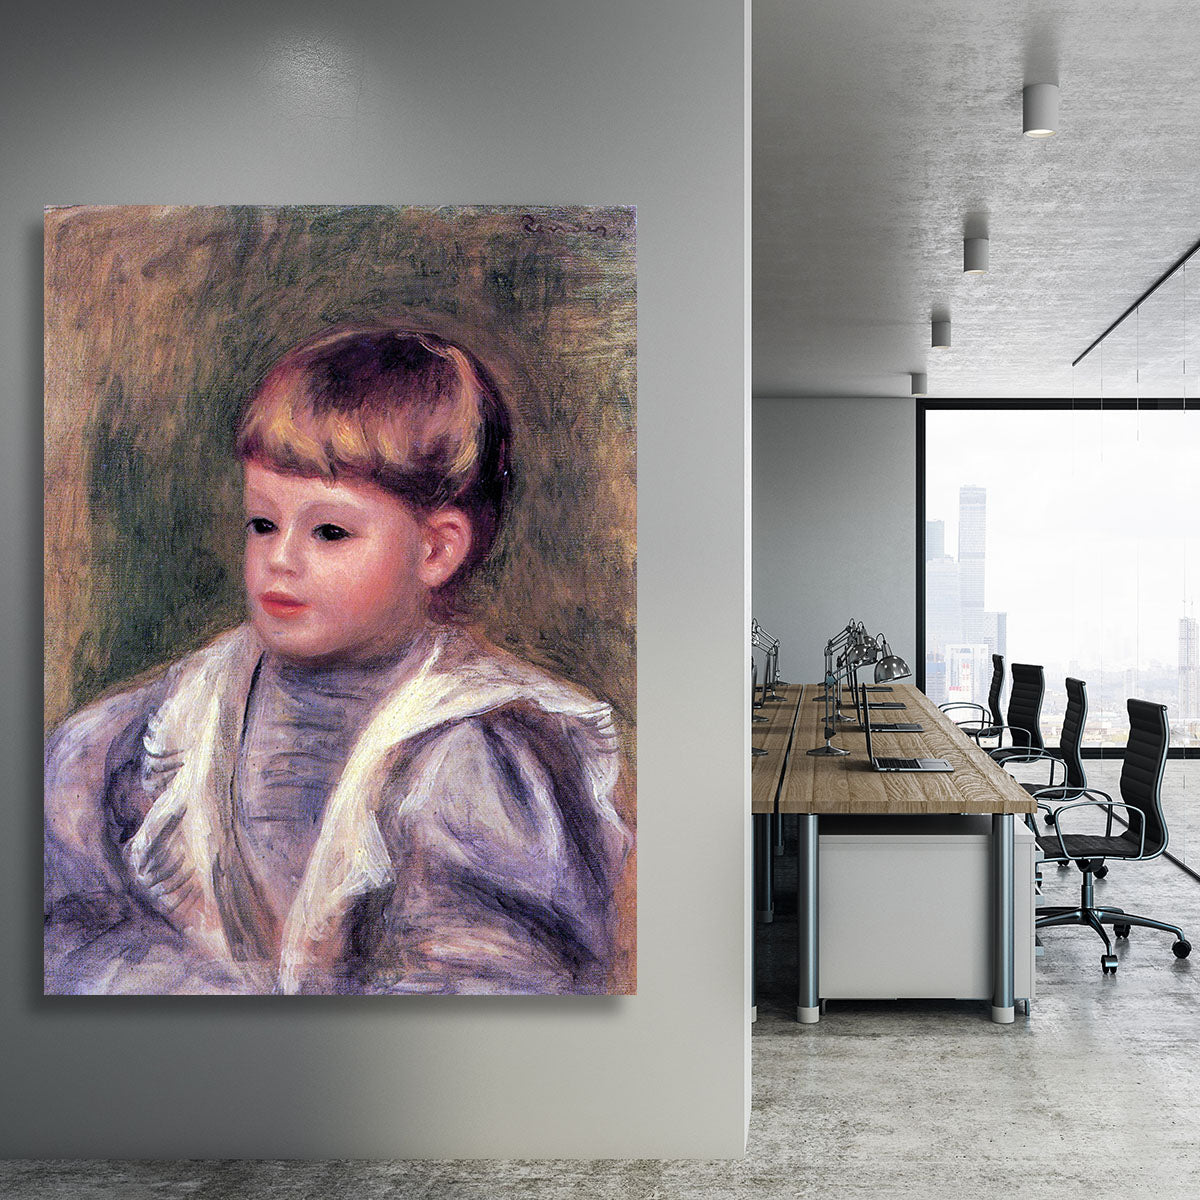 Portrait of a child Philippe Gangnat by Renoir Canvas Print or Poster - Canvas Art Rocks - 3